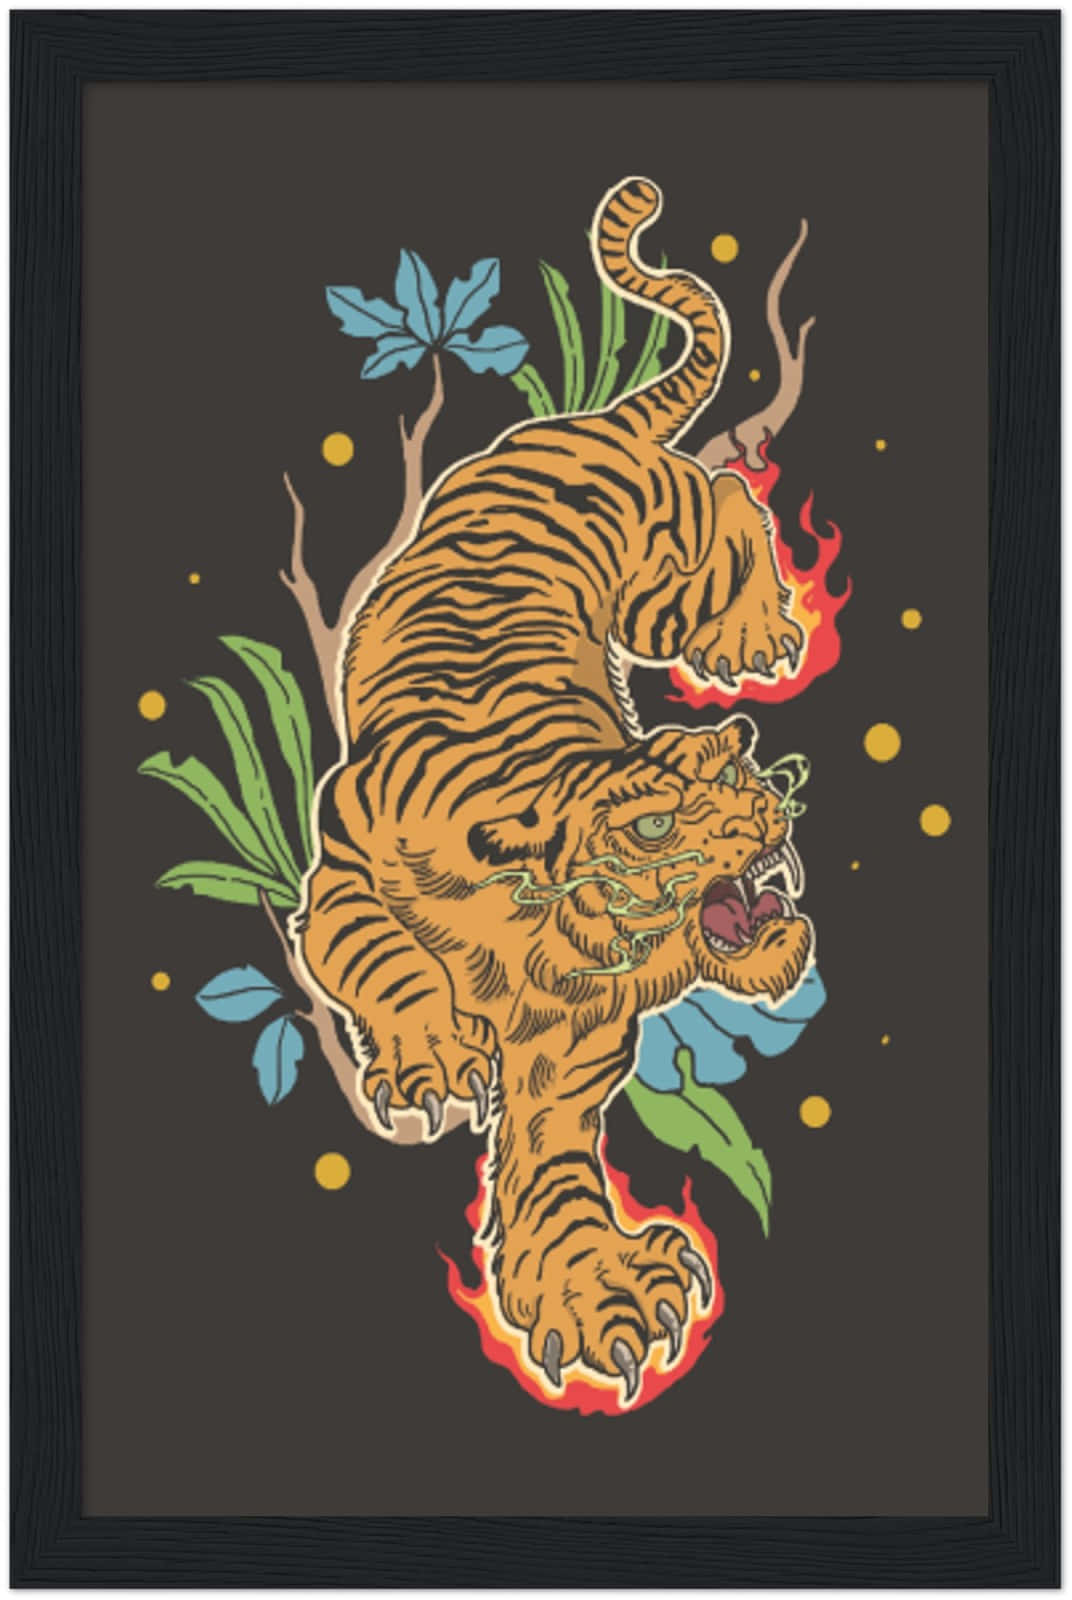 Flaming Tiger Artwork Wallpaper